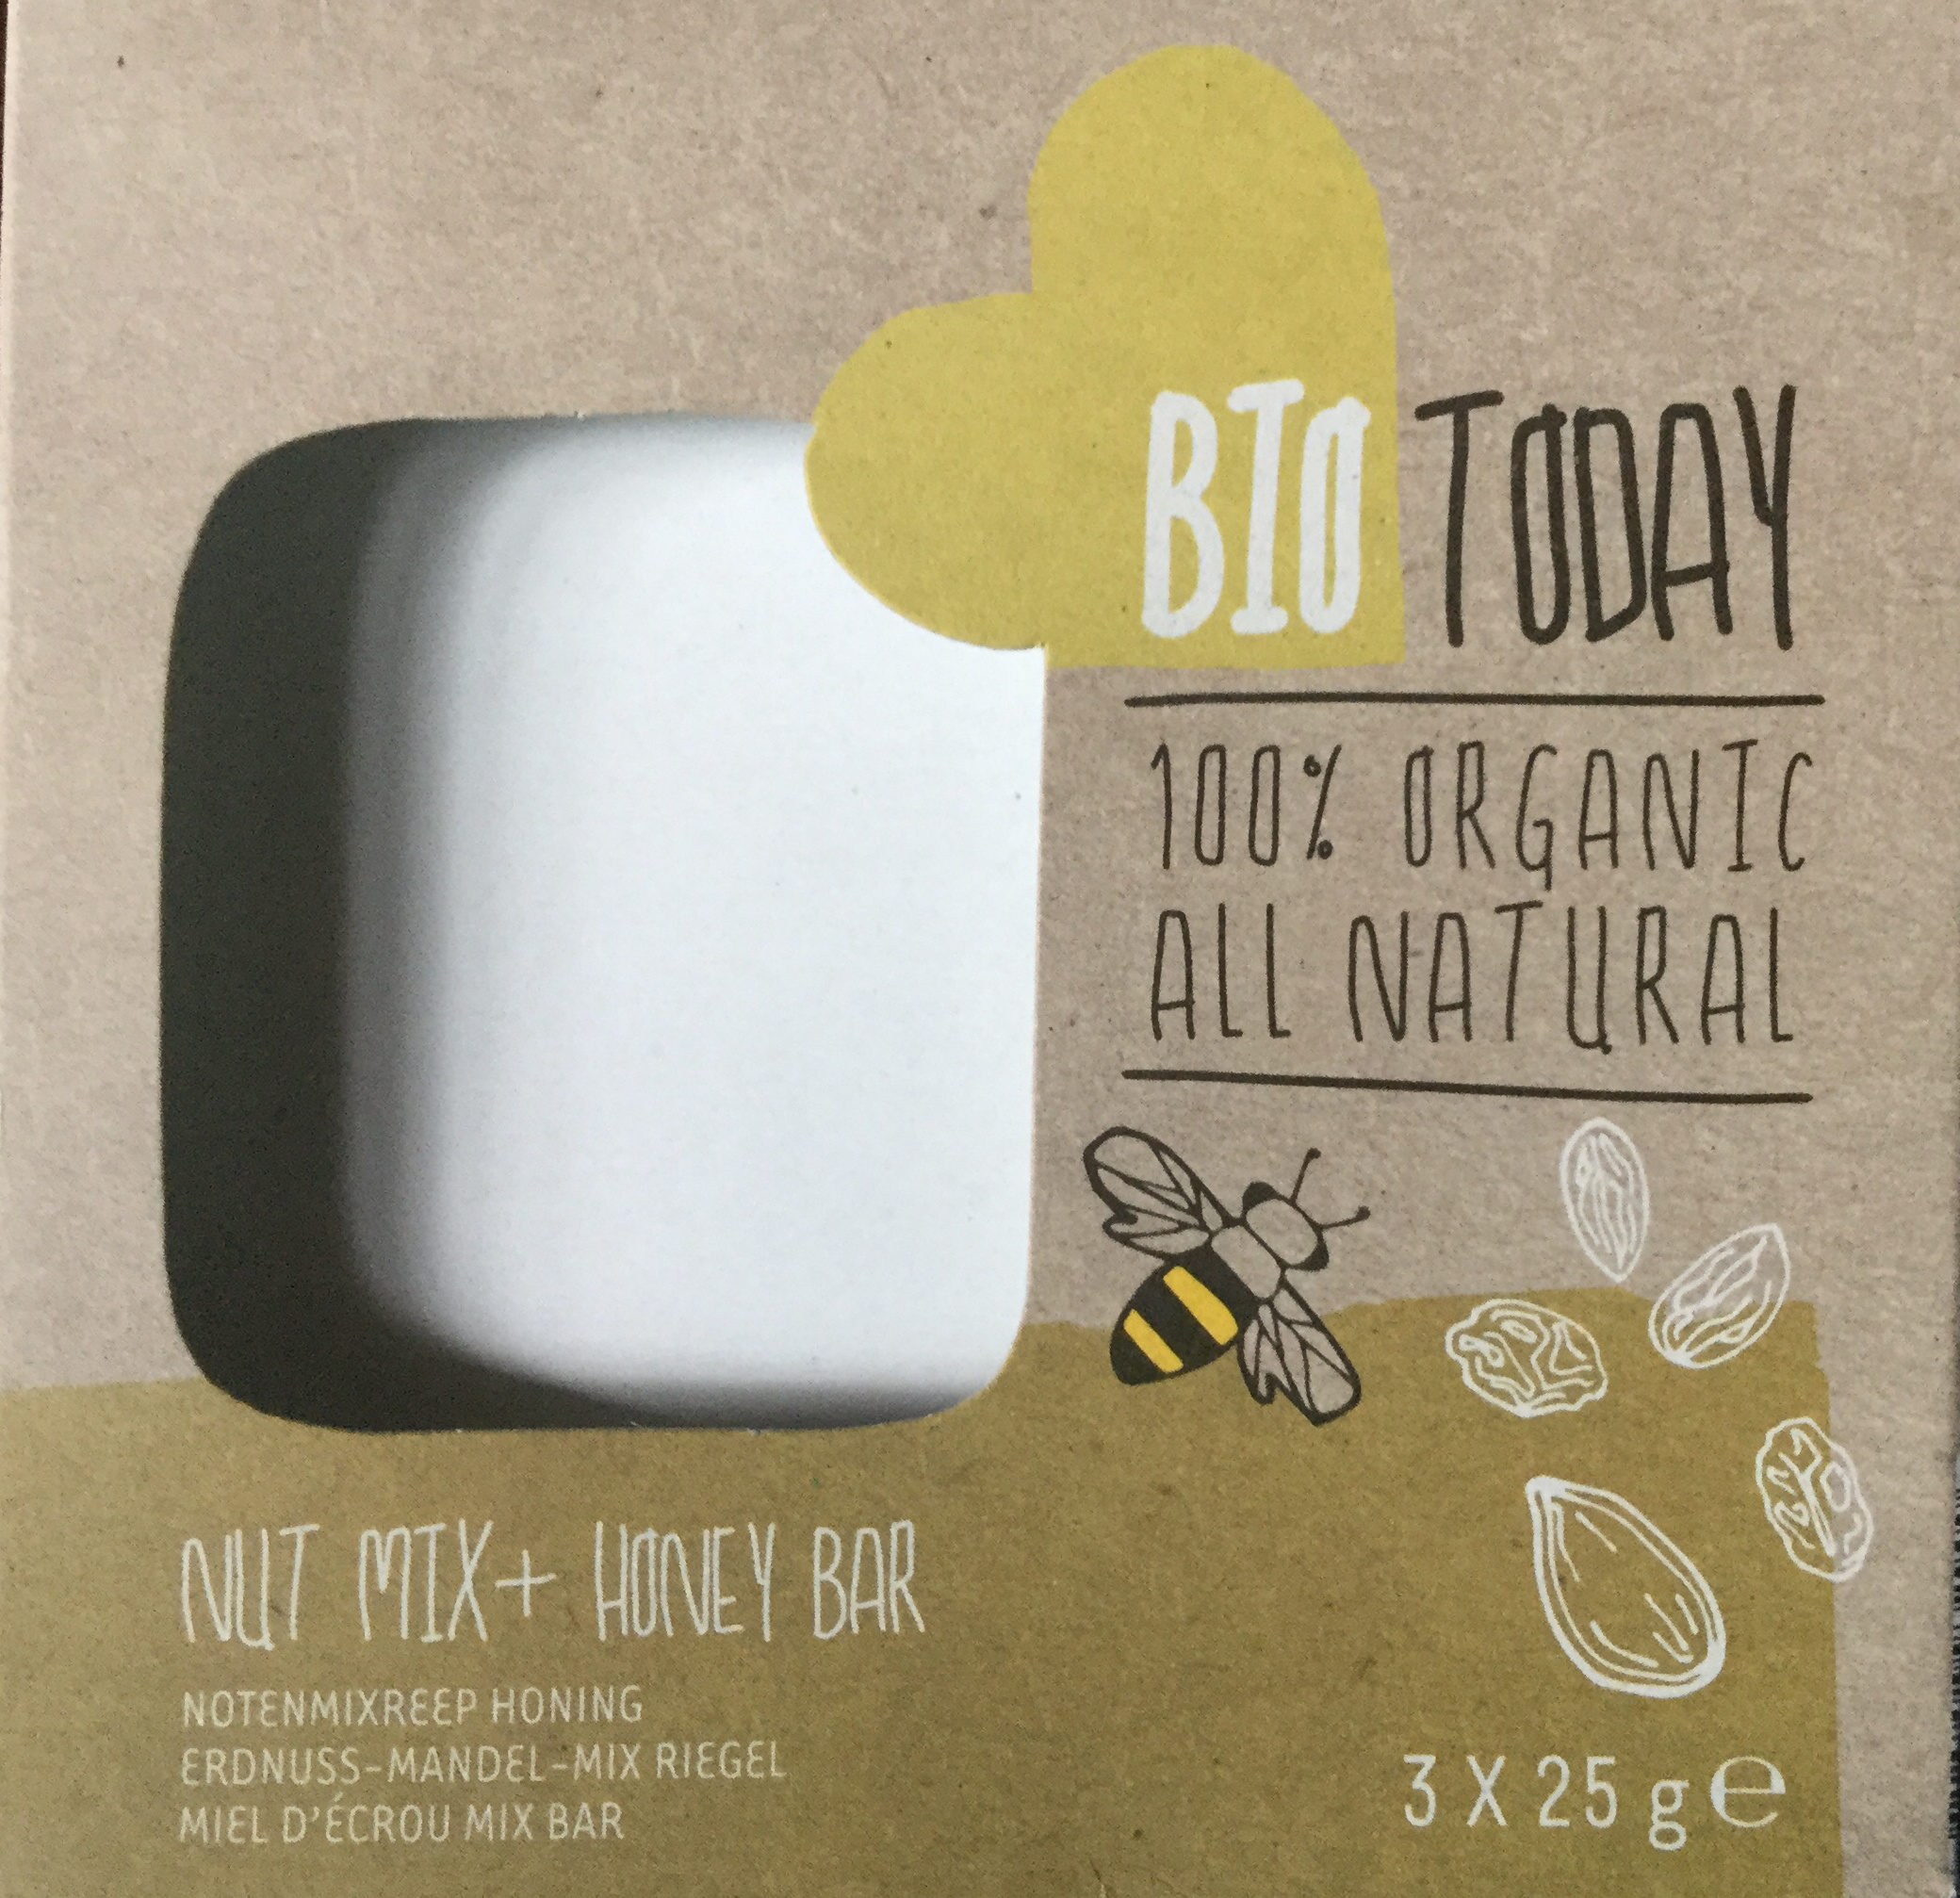 Bio Today Nut Mix + Honey Bar (notenmixreep Honing) - Product - en